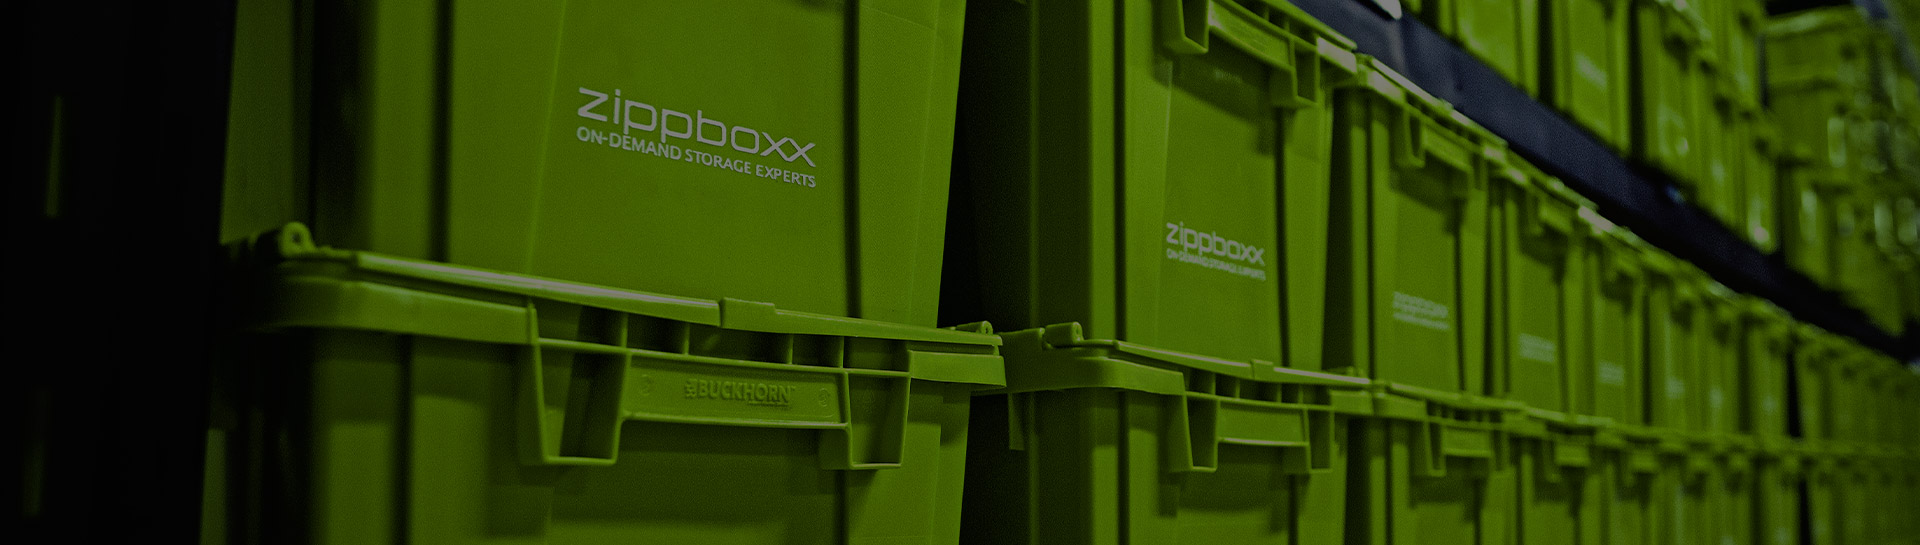 background zippboxx storage boxes